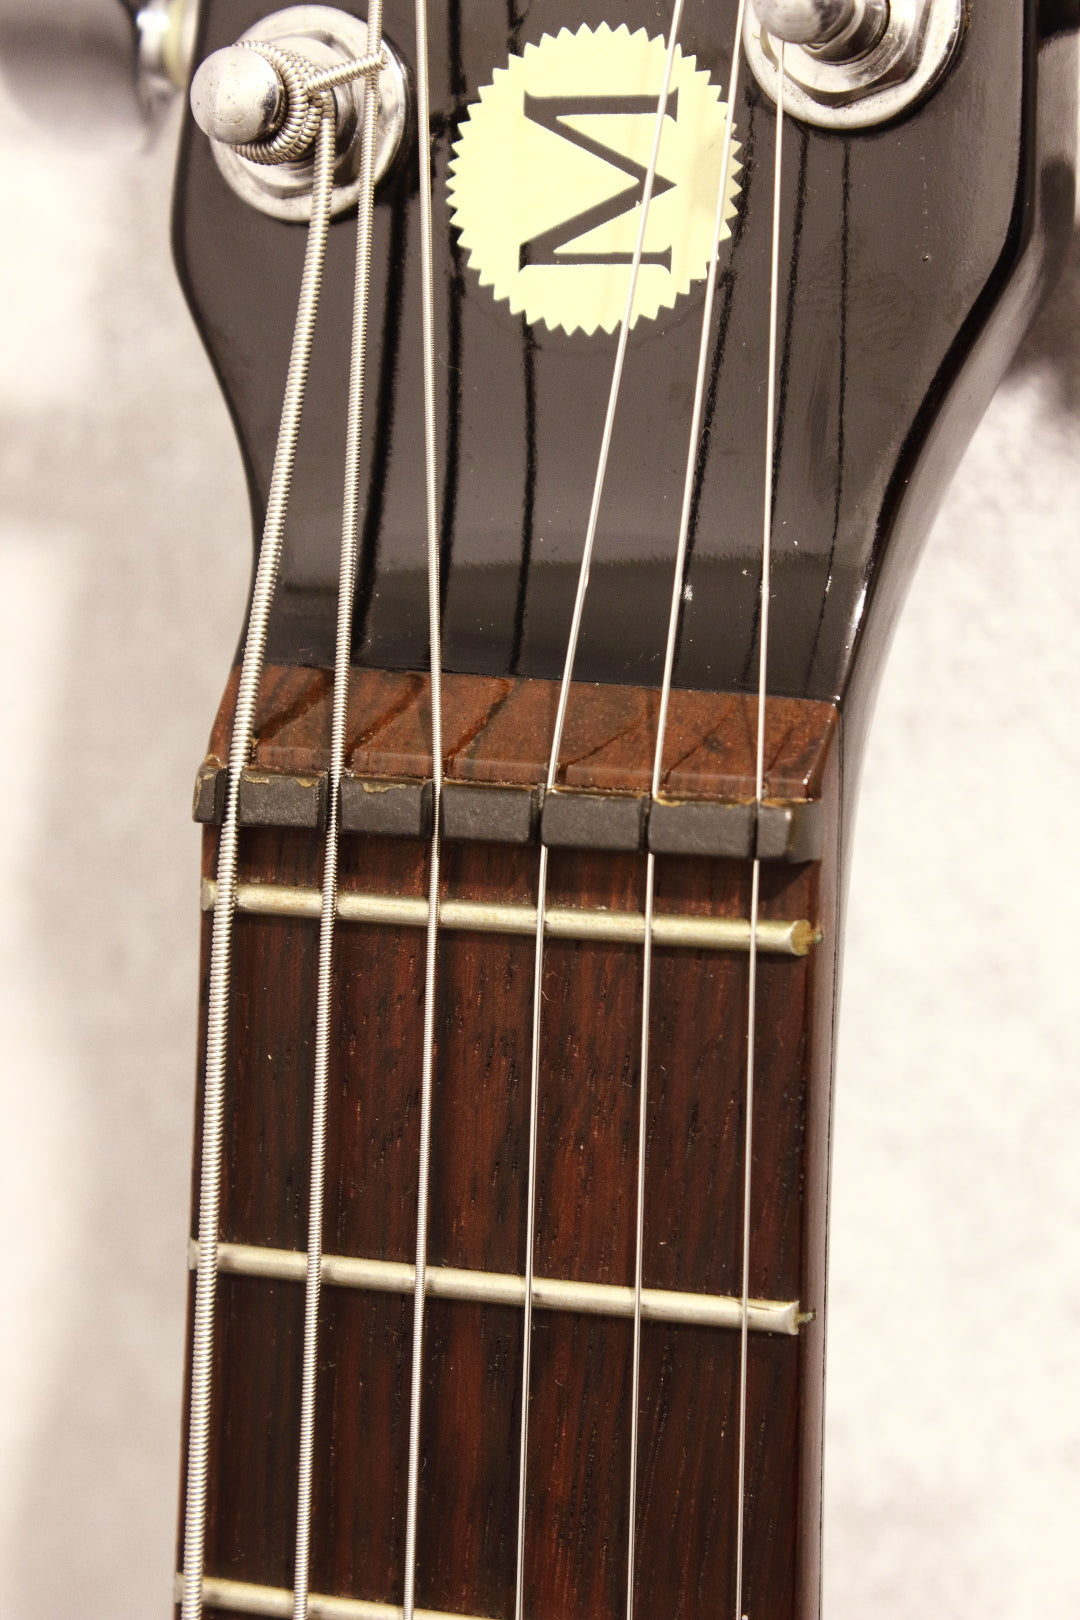 Mosrite Mini Octave Guitar Black 1995